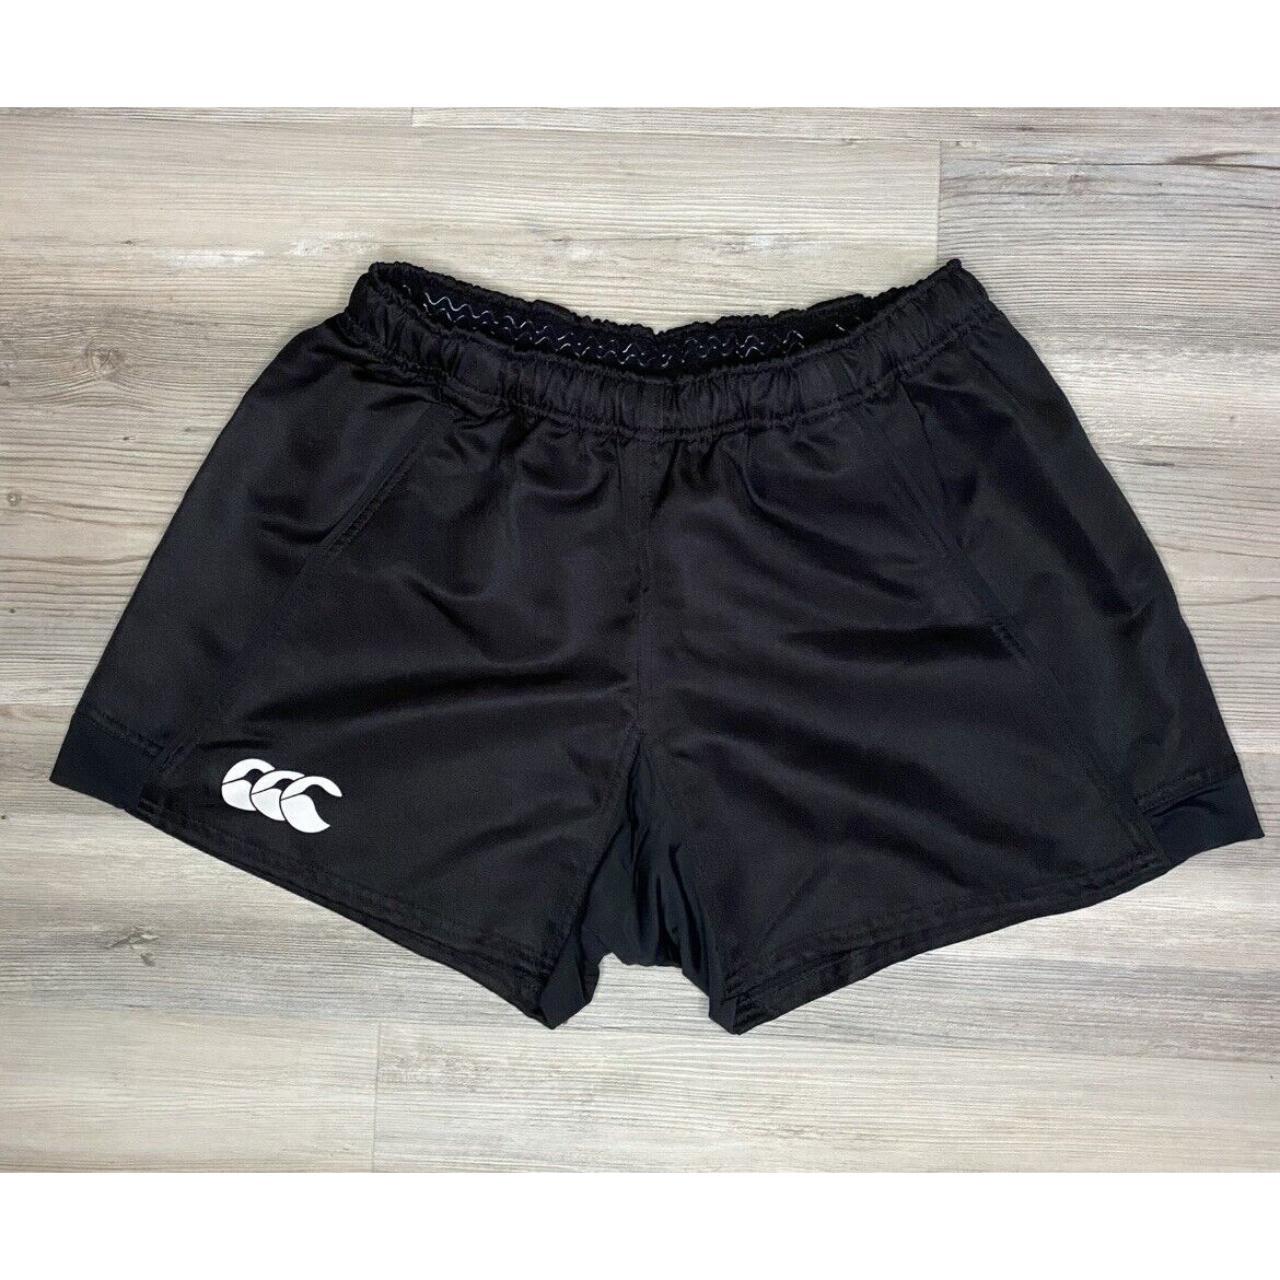 Canterbury Men's Black Shorts